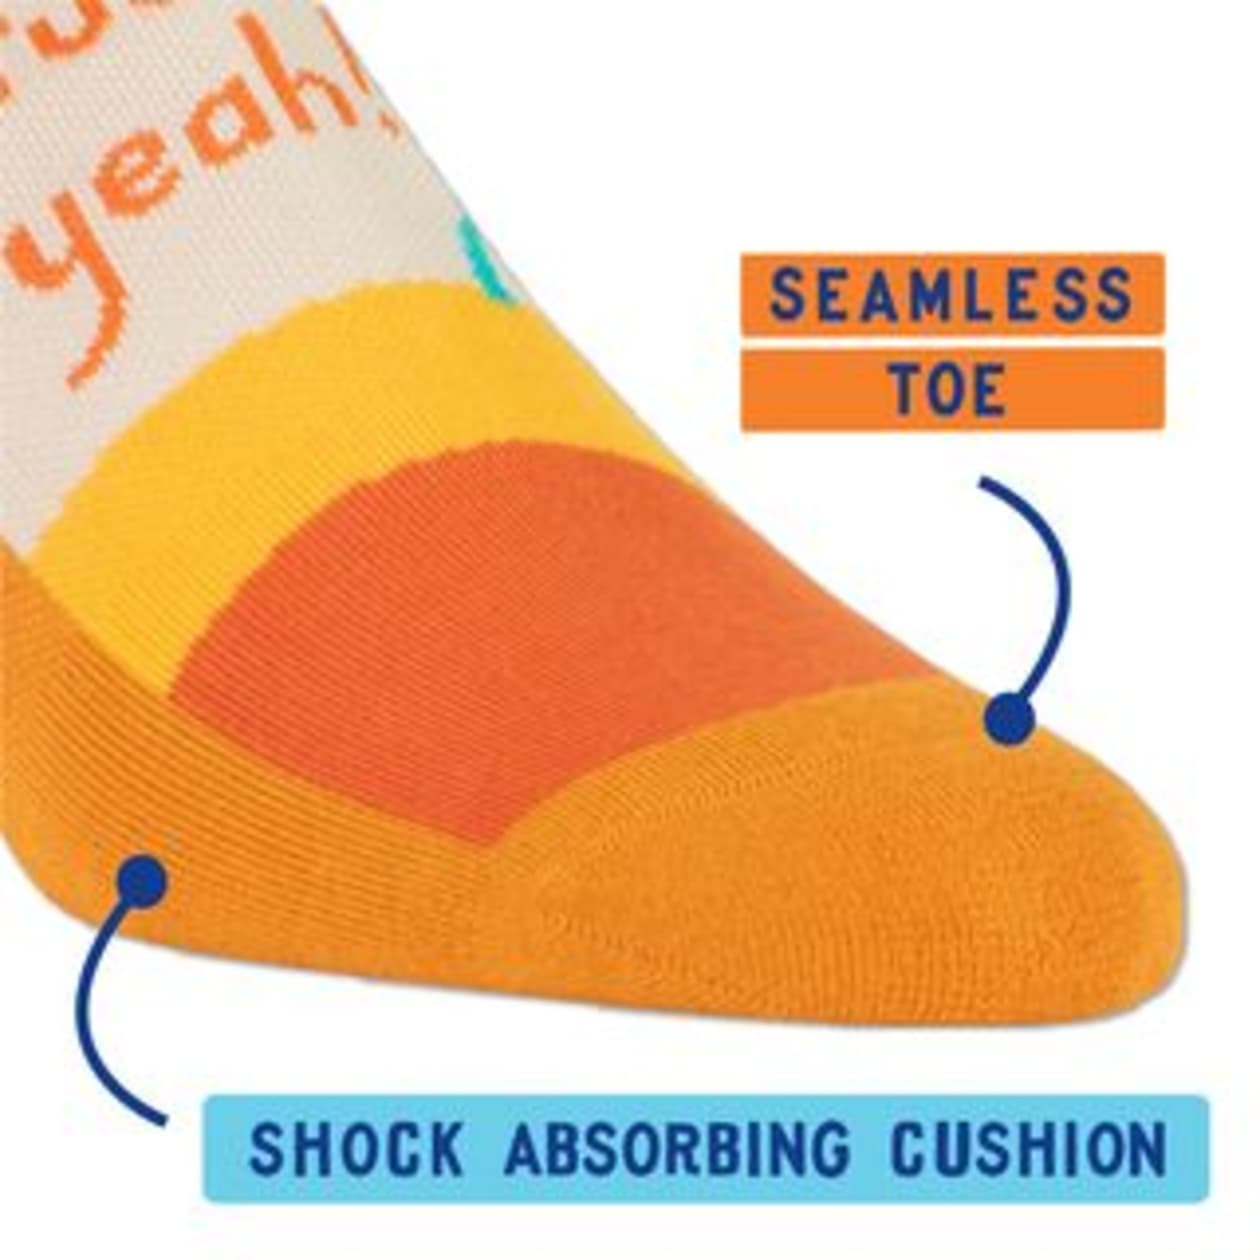 Endorphins Fuck Yeah Unisex Sneaker Socks [2 Size Options] | BlueQ at GetBullish